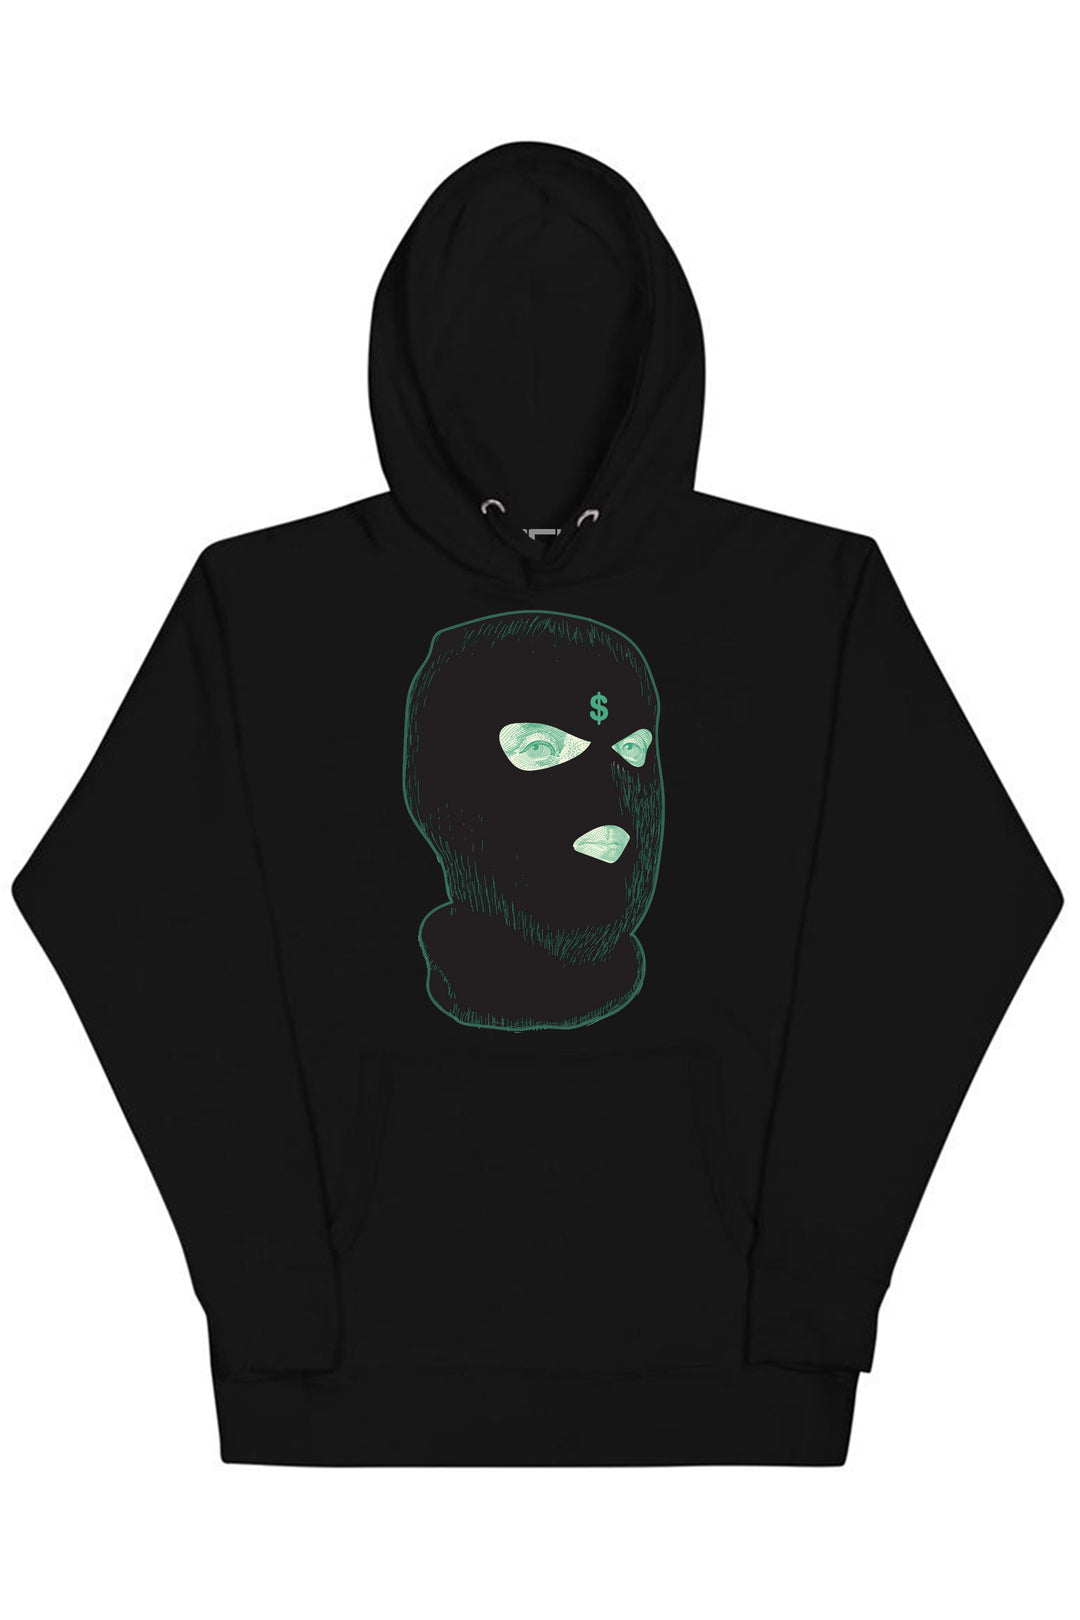 Ski Mask Money Hoodie (Black Logo) - Zamage